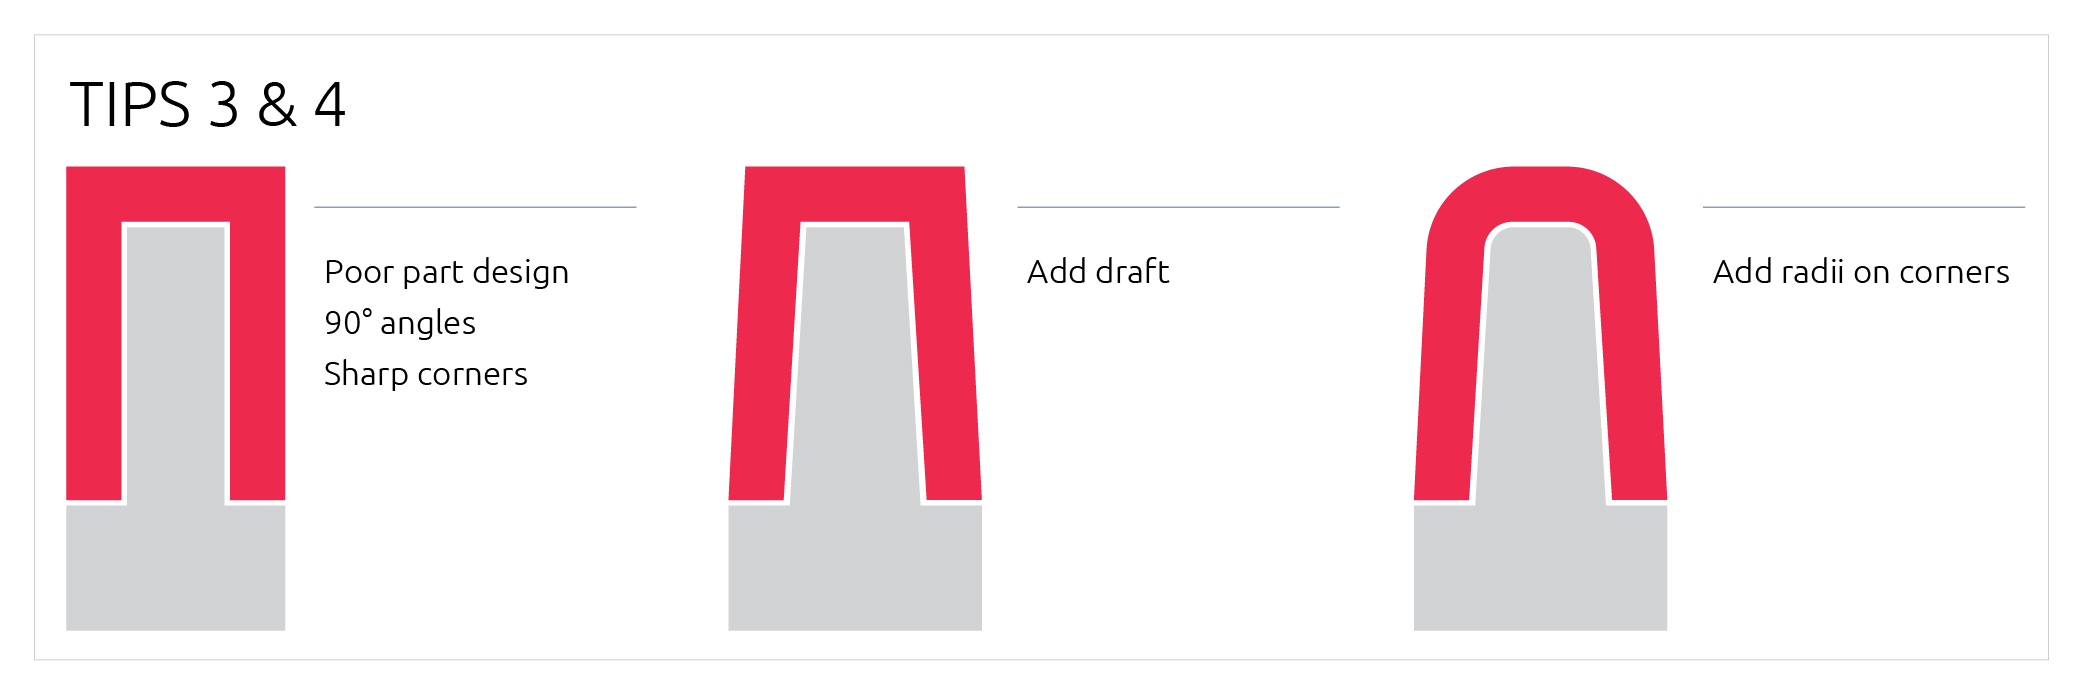 Tip 3&4 | Poor part design 90 degree angle, sharp corners. Add draft. Add radii on corners.